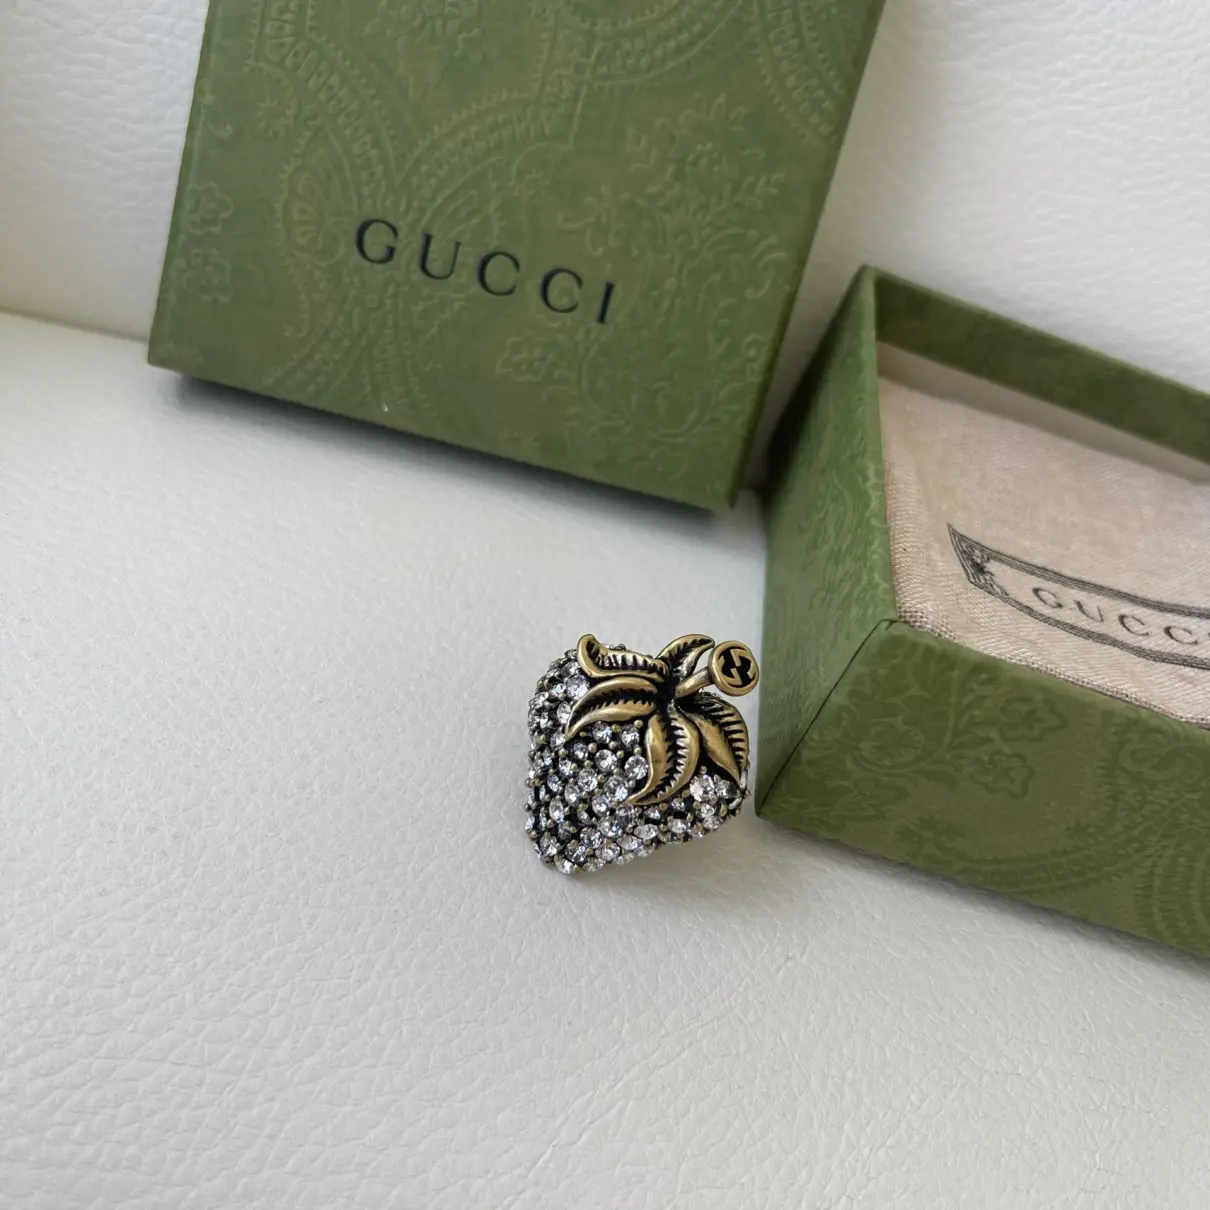 Crystal ring Gucci